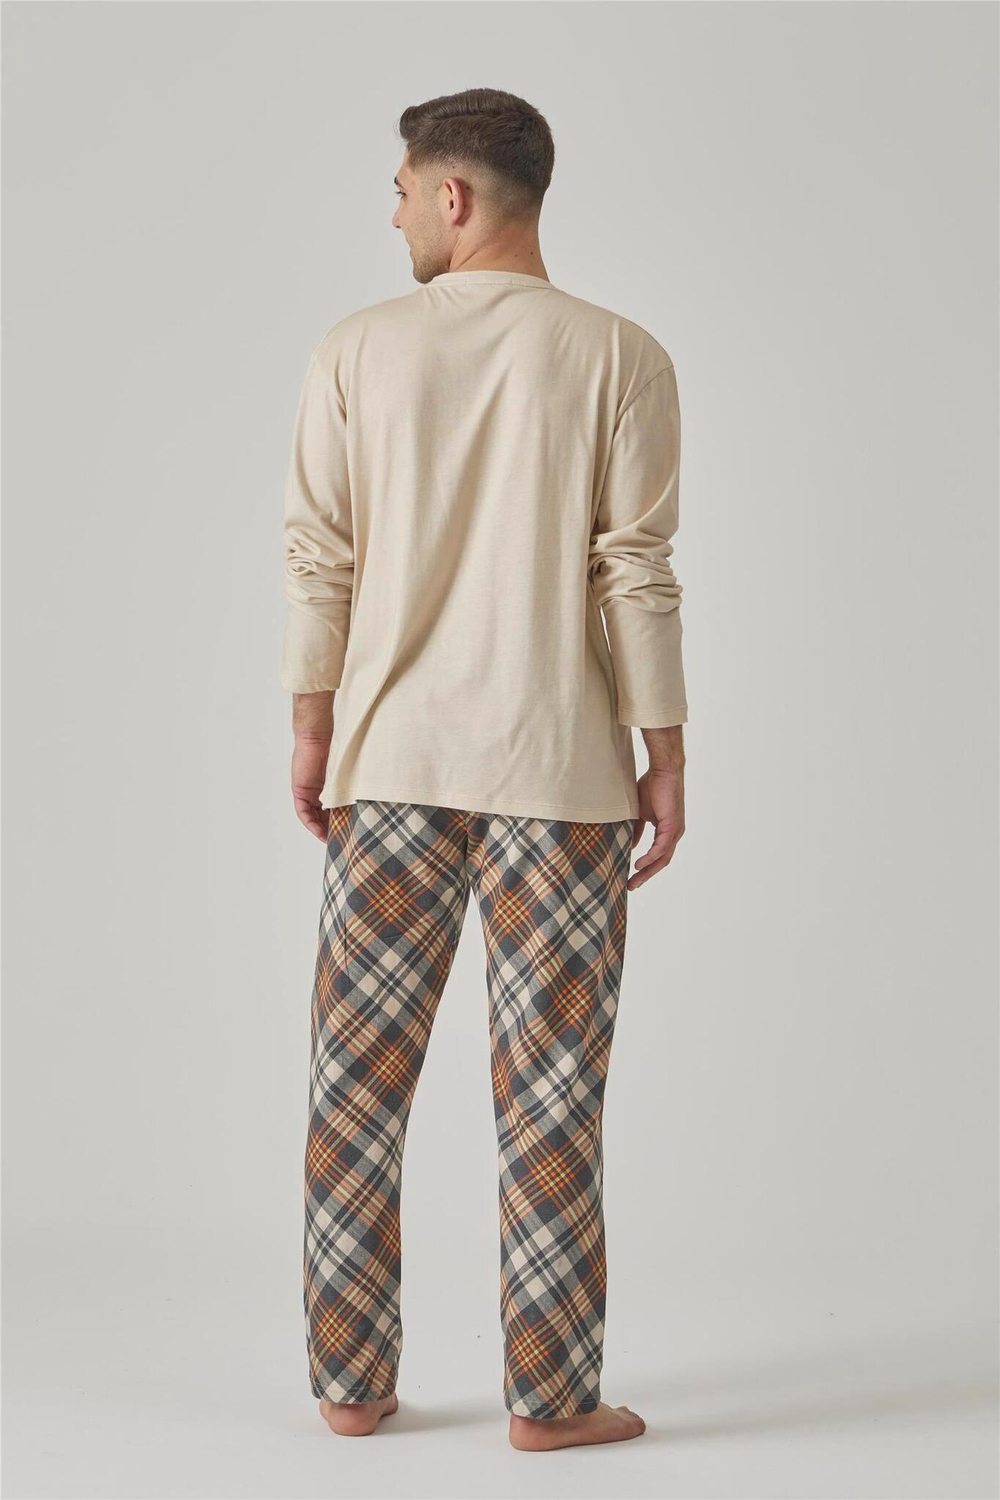 RELAX MODE - Пижама мужская пижама мужская со штанами - 10800